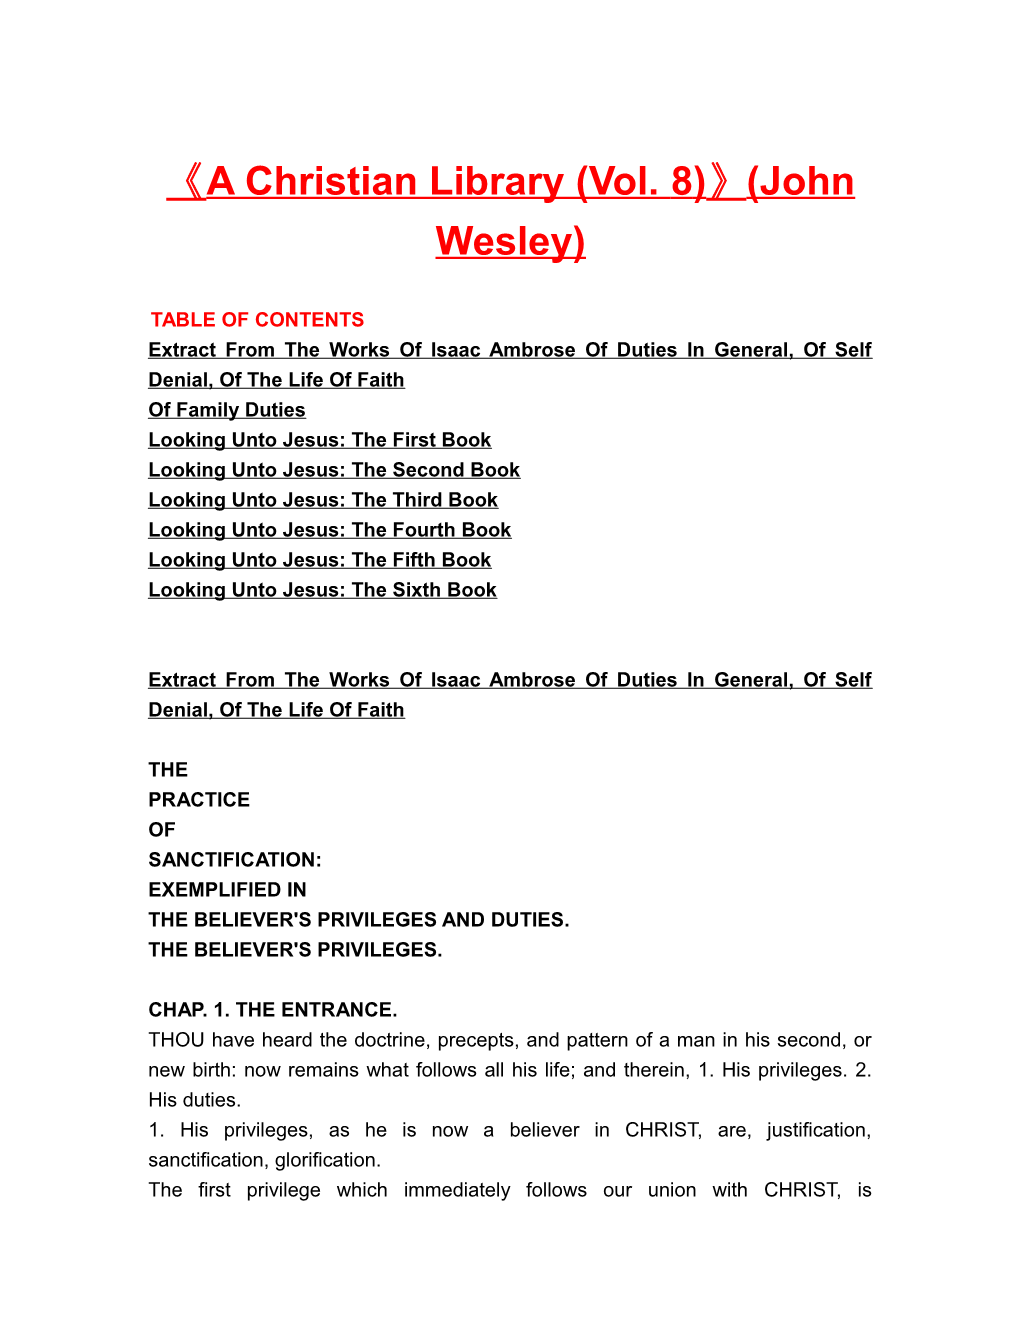 A Christian Library (Vol. 8) (John Wesley)